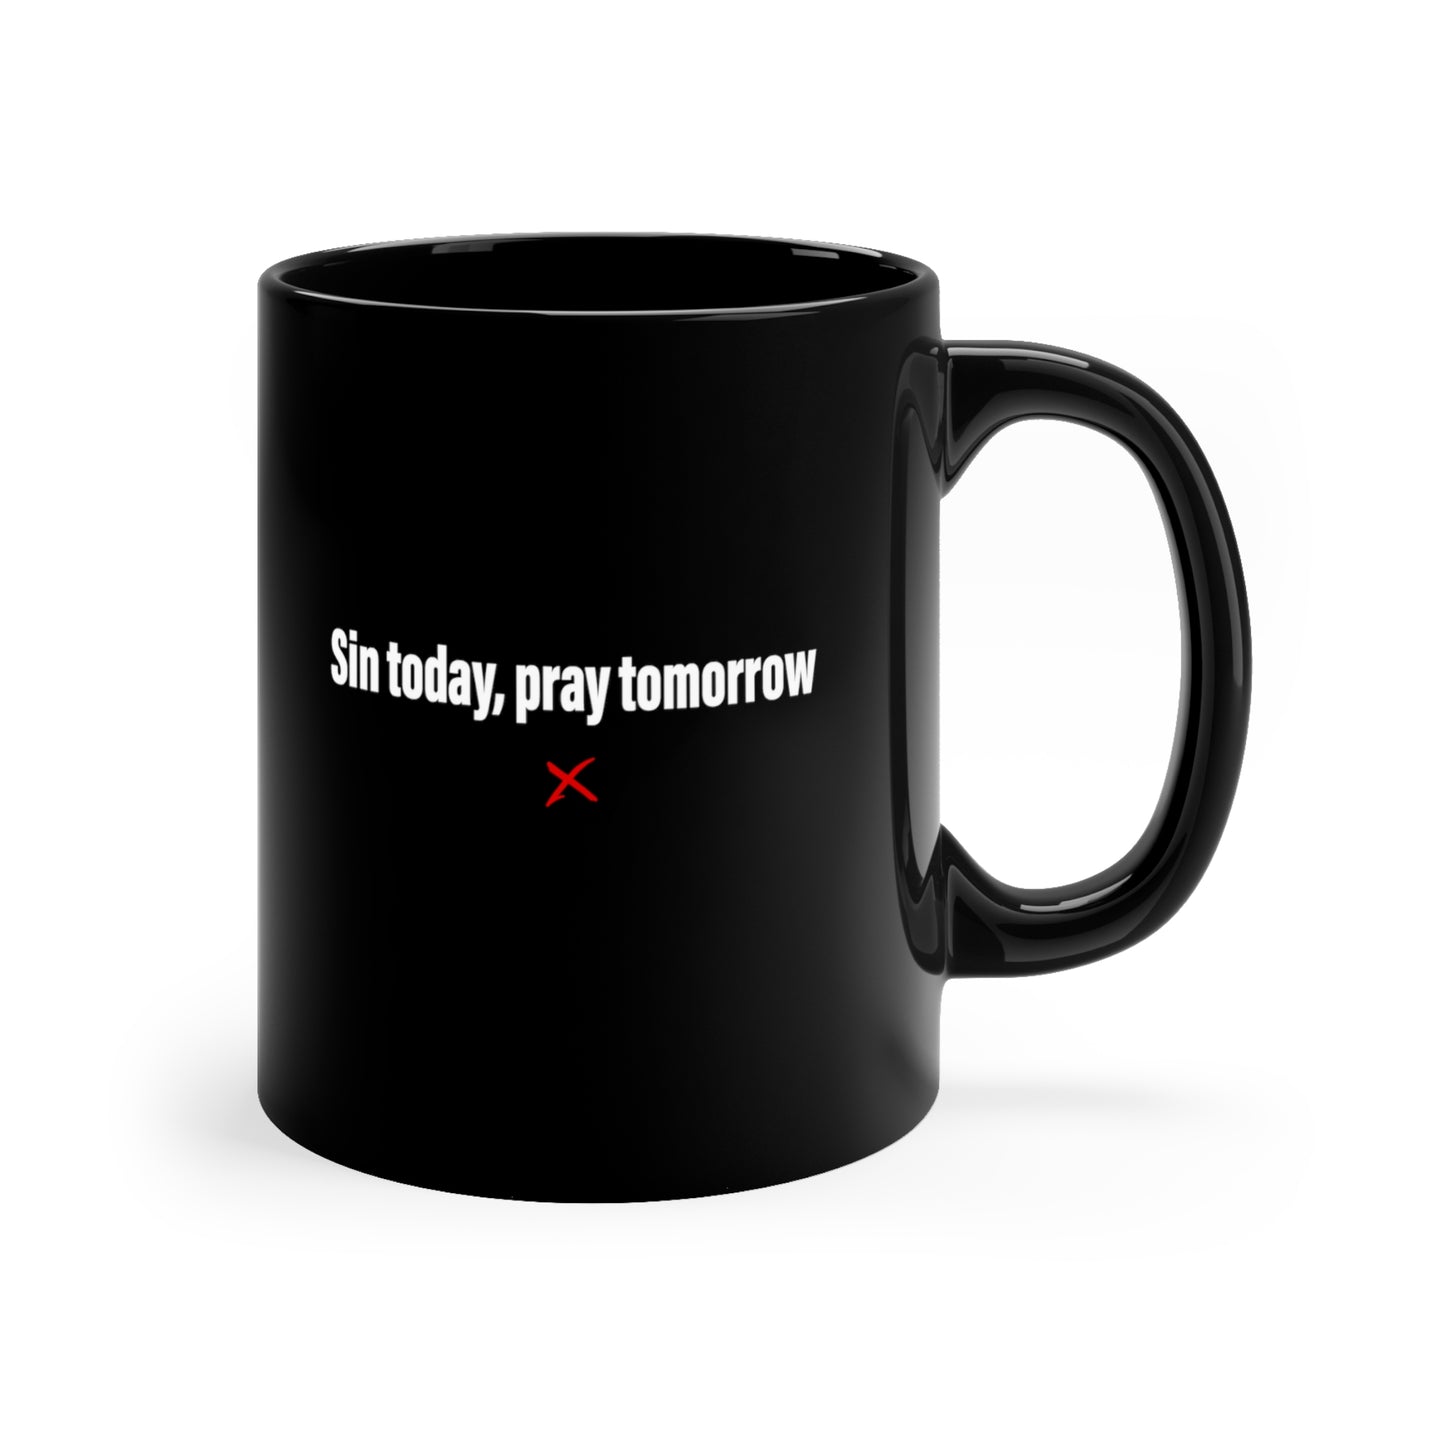 Sin today, pray tomorrow - Mug